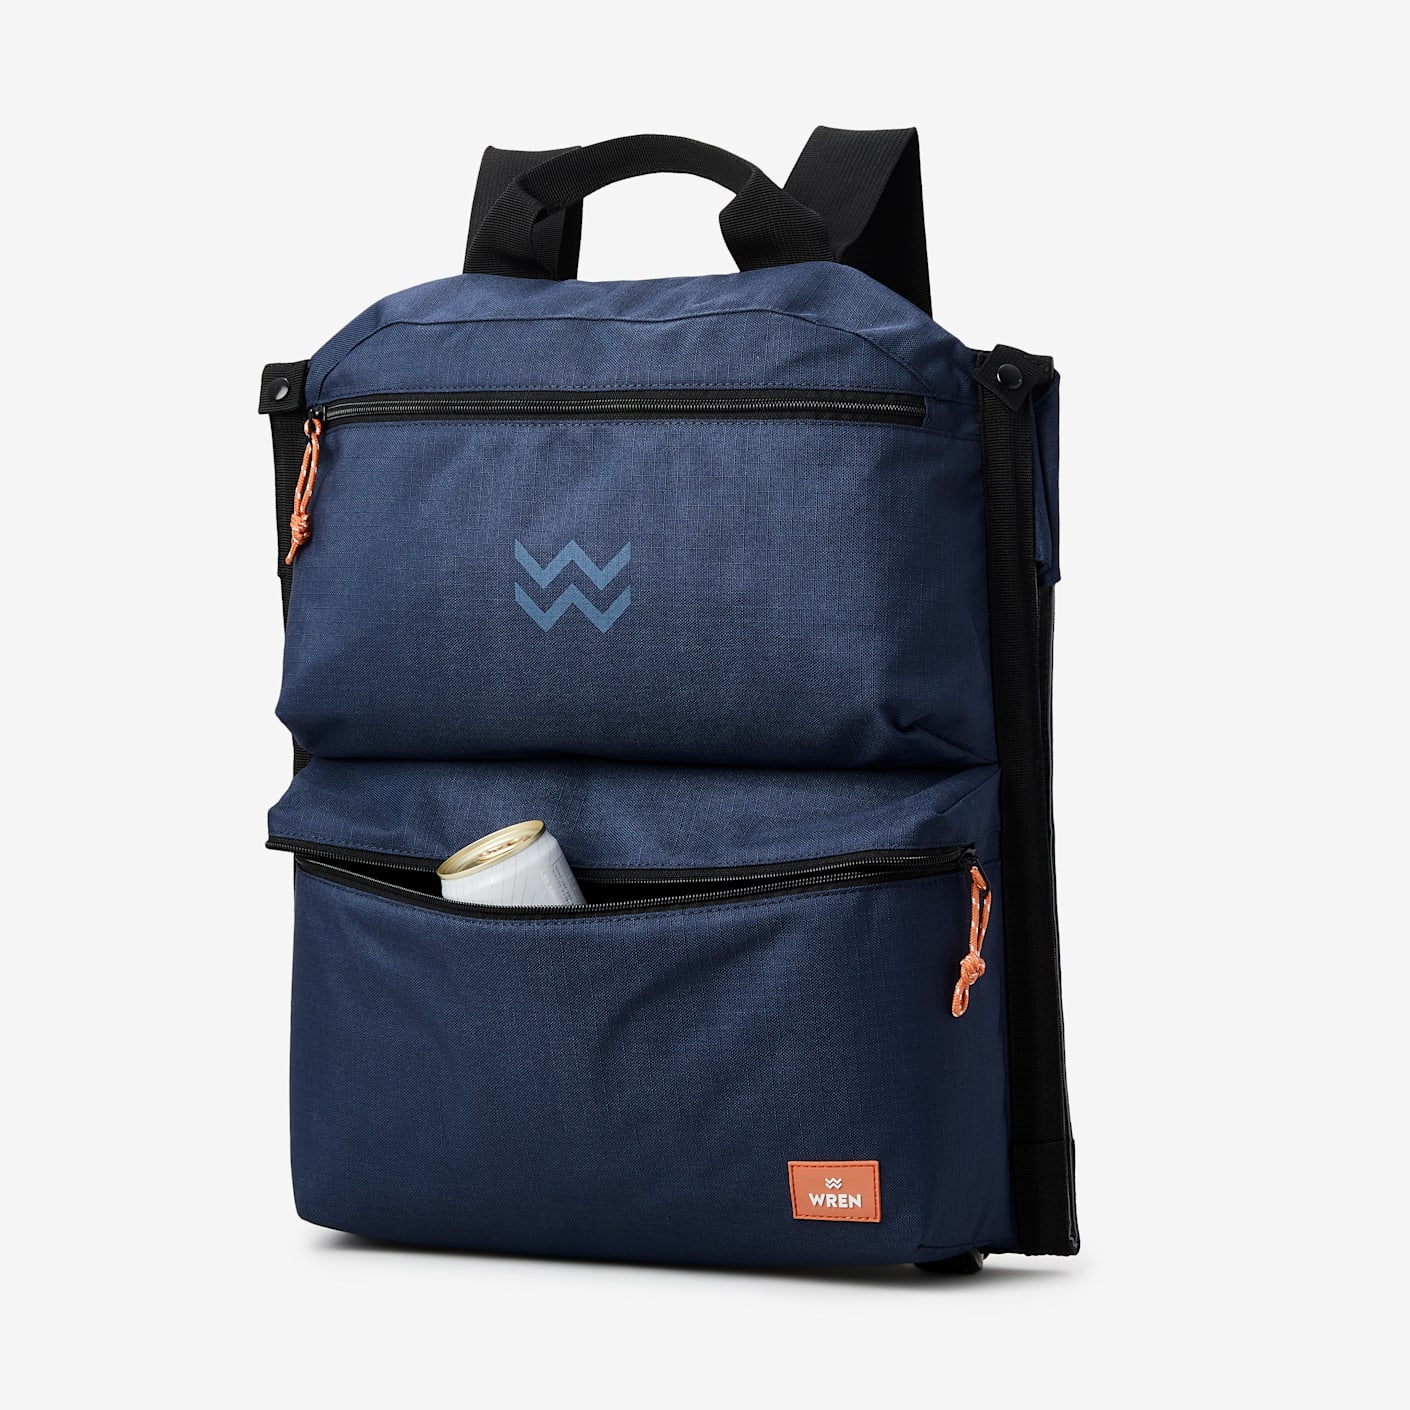 Best Backpack Cooler Chair | Portal Outdoors Navy Blue